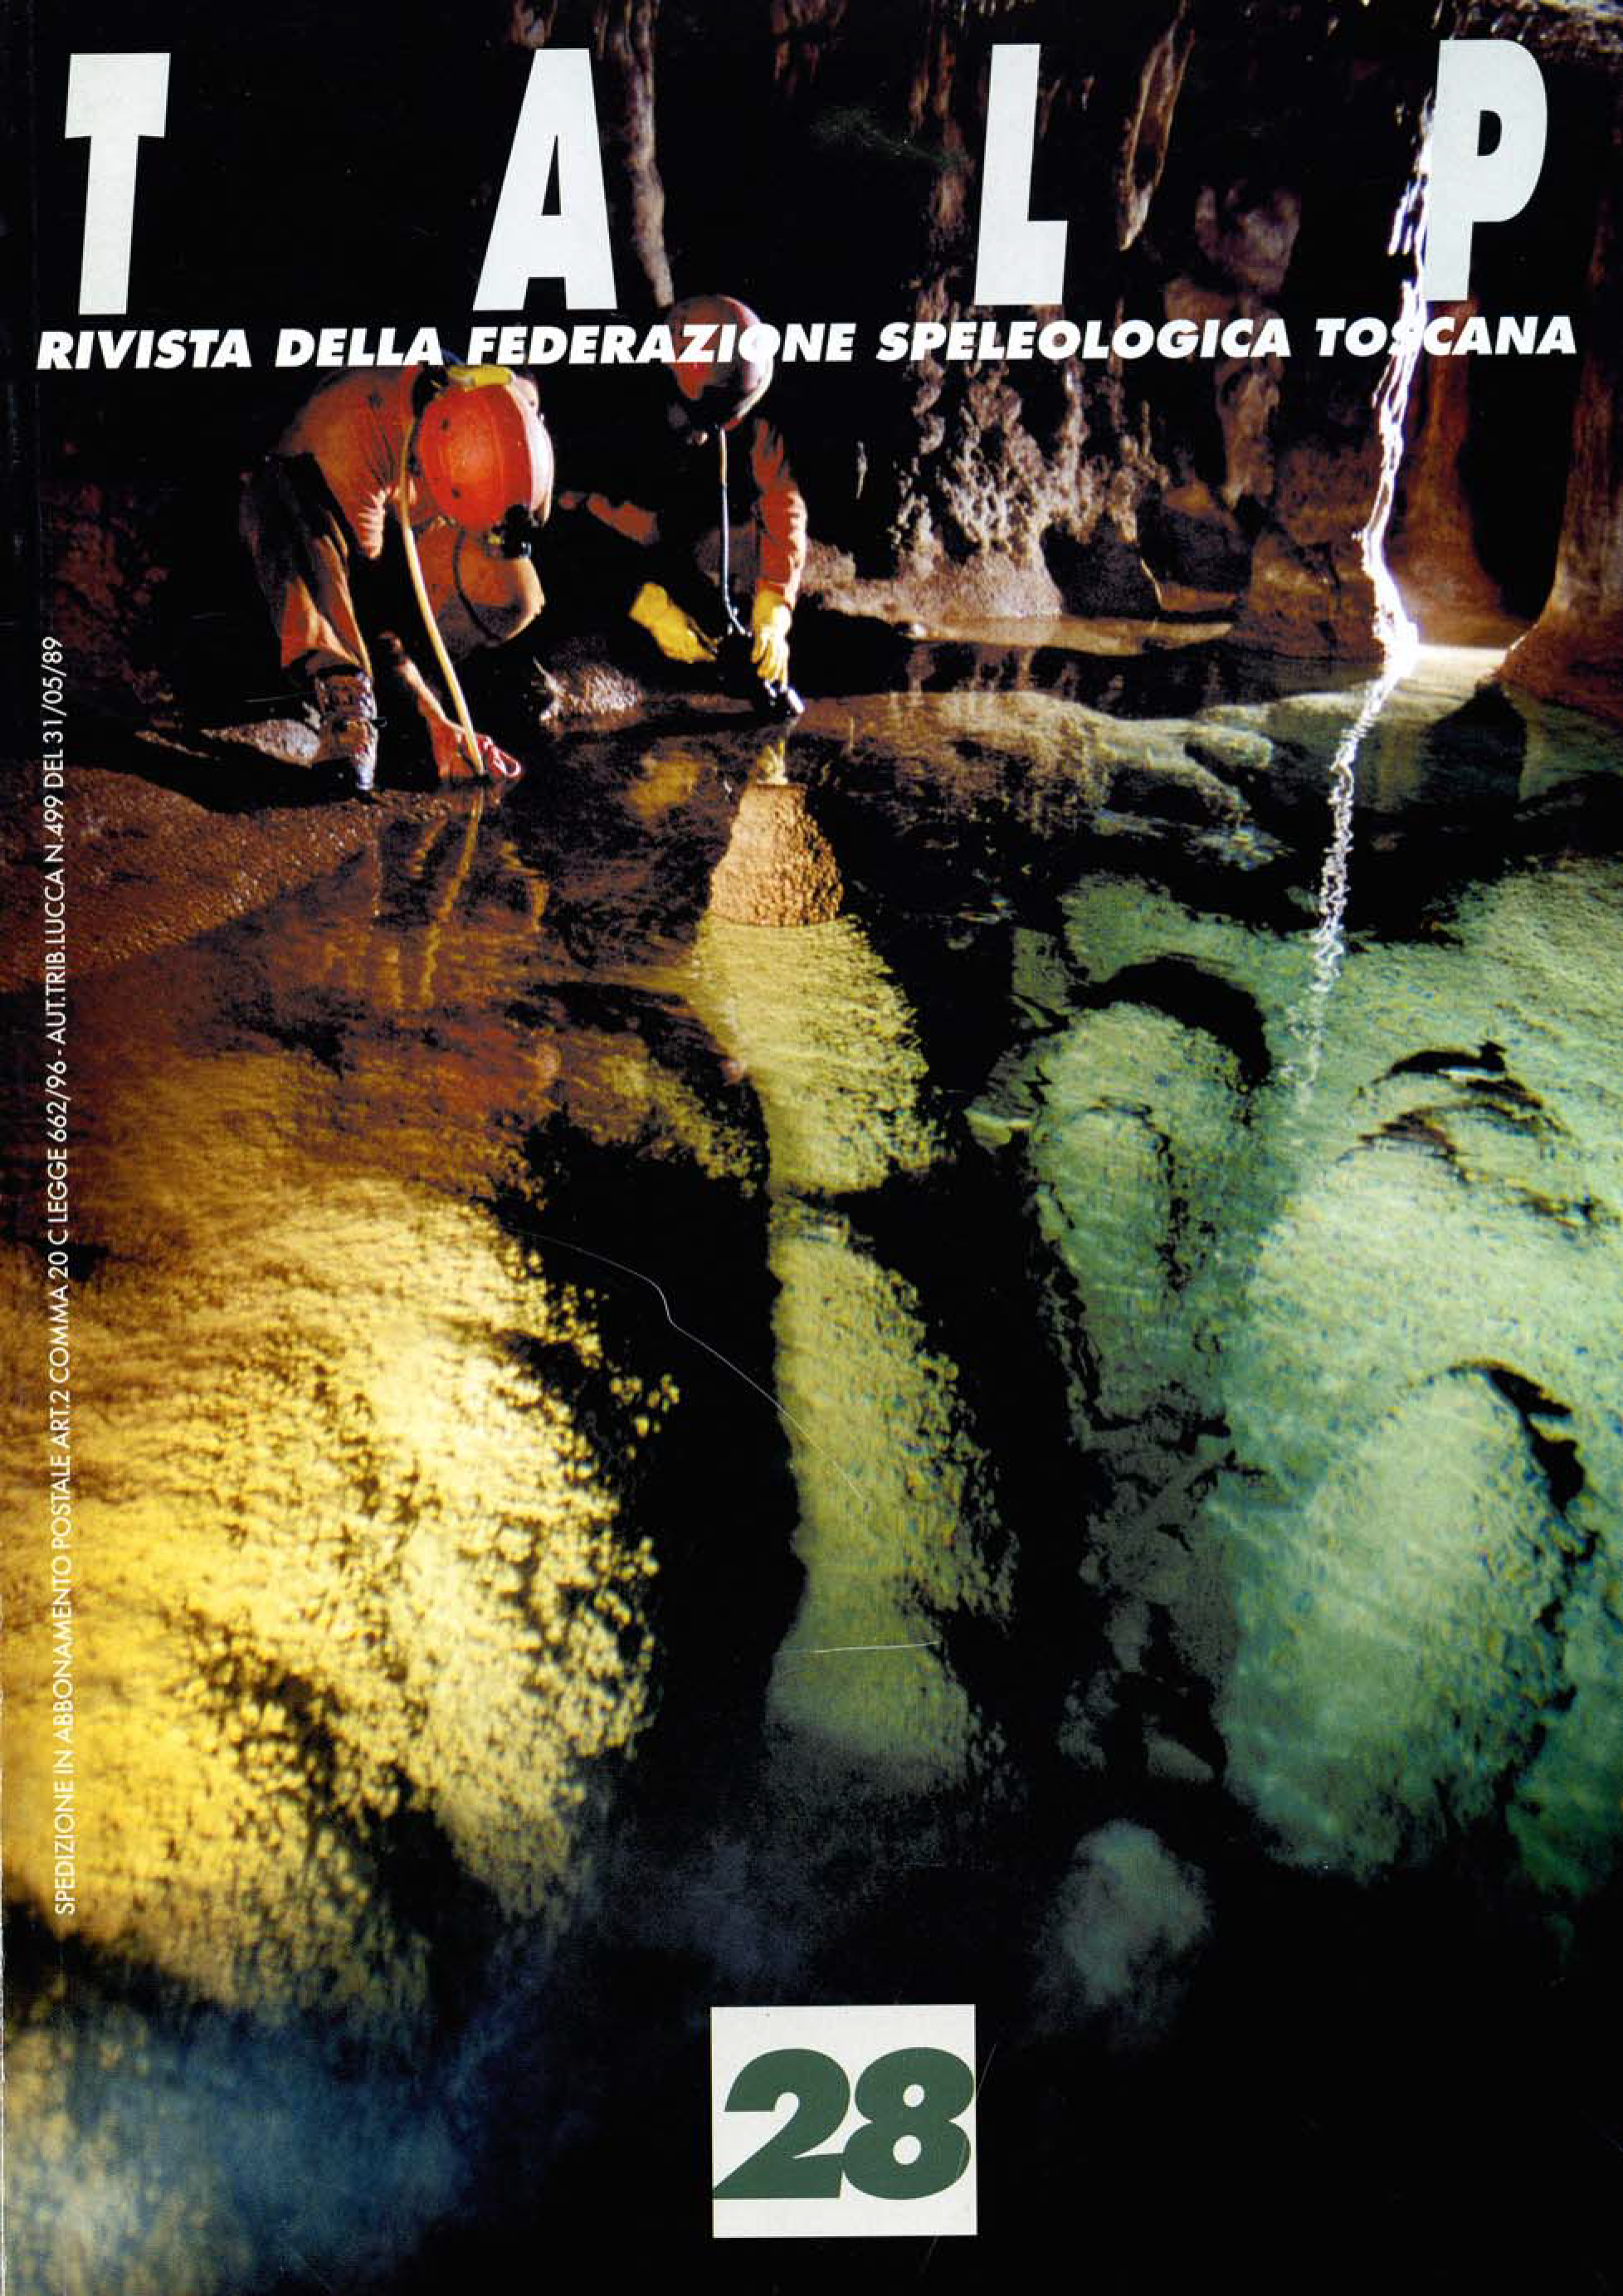 Grotta di Montecchio: una storia in due puntate